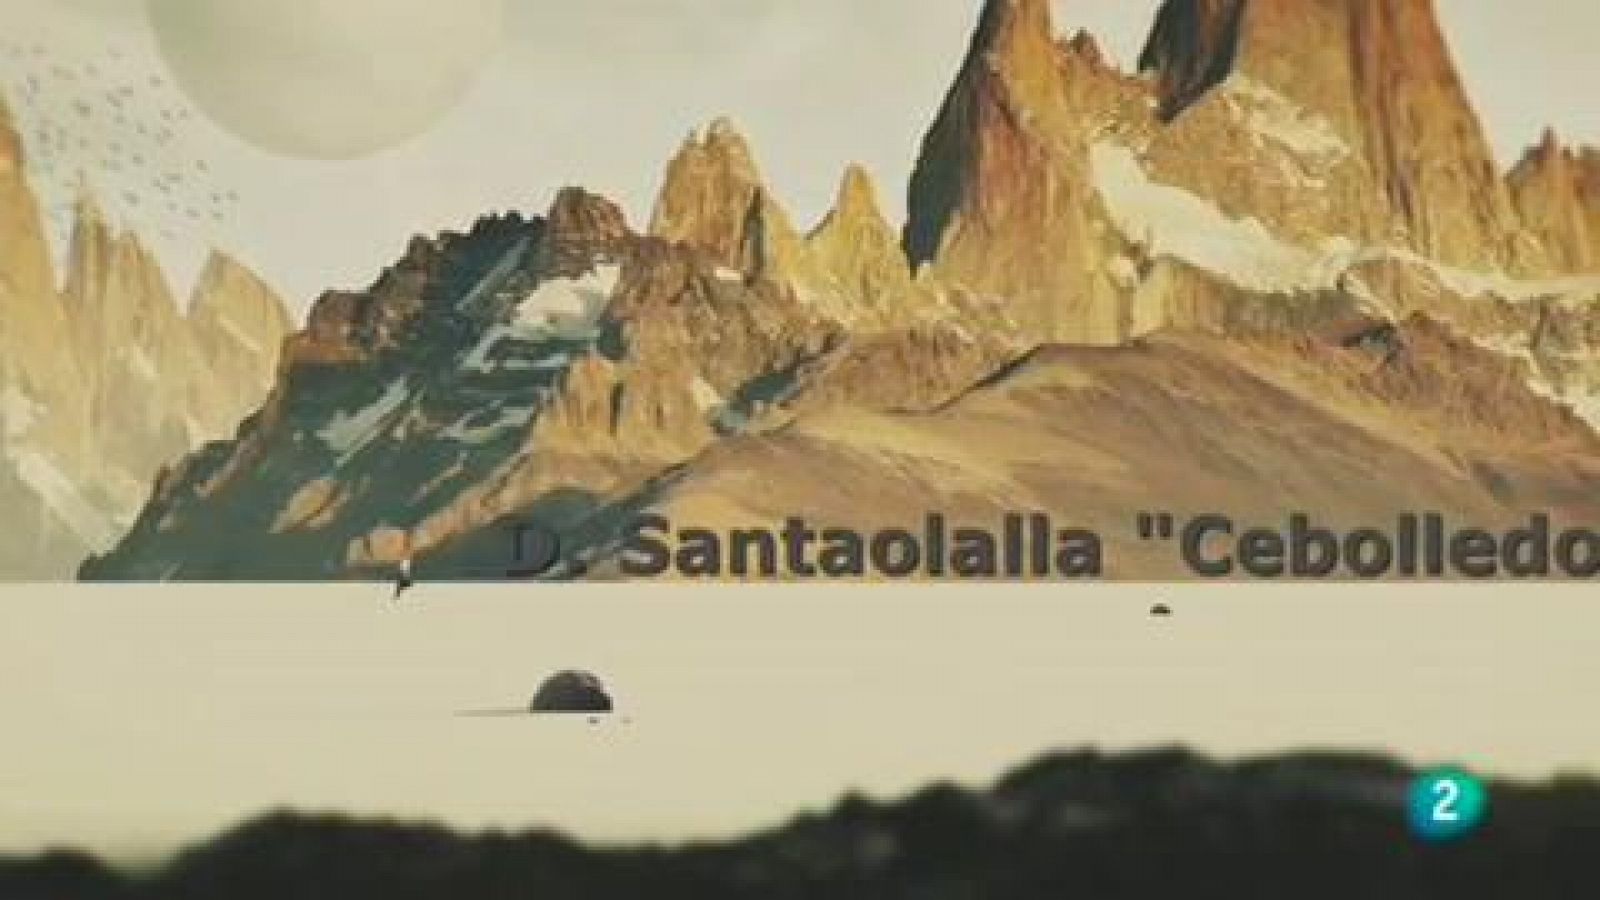 La aventura del Saber: Boek visual David Santaolalla 'Cebolledo' | RTVE Play